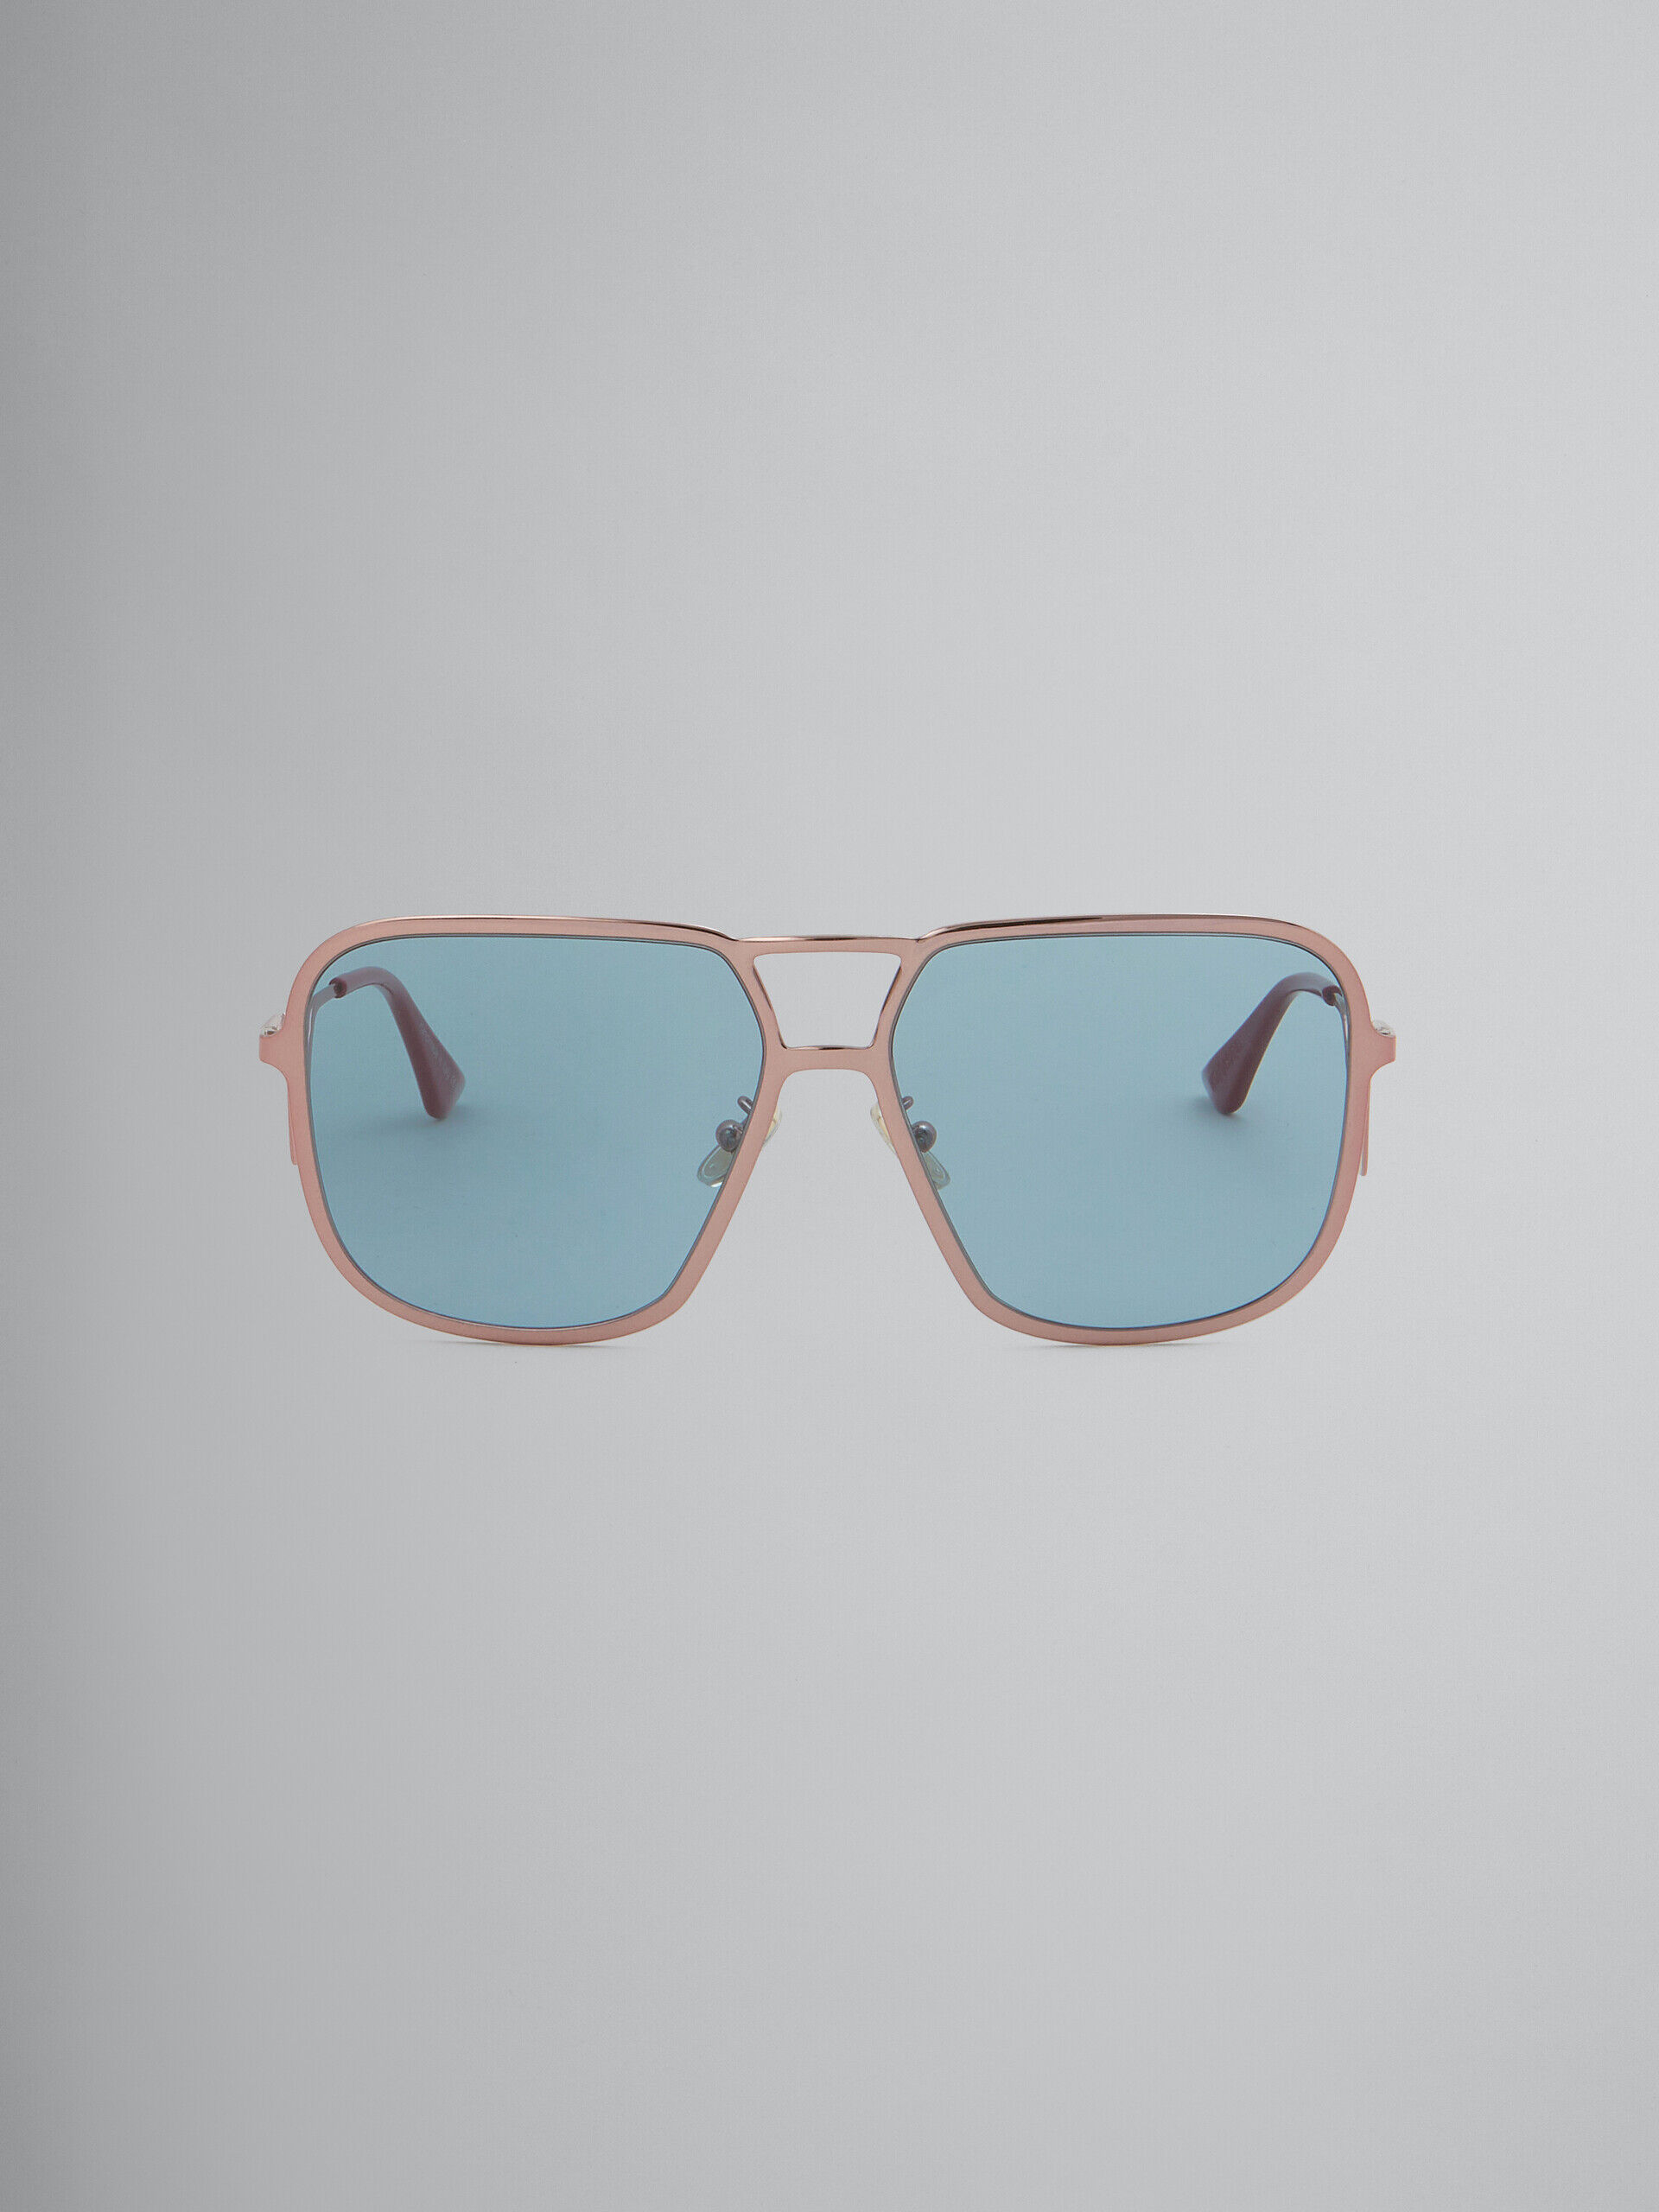 Ha Long Bay metal sunglasses | Marni